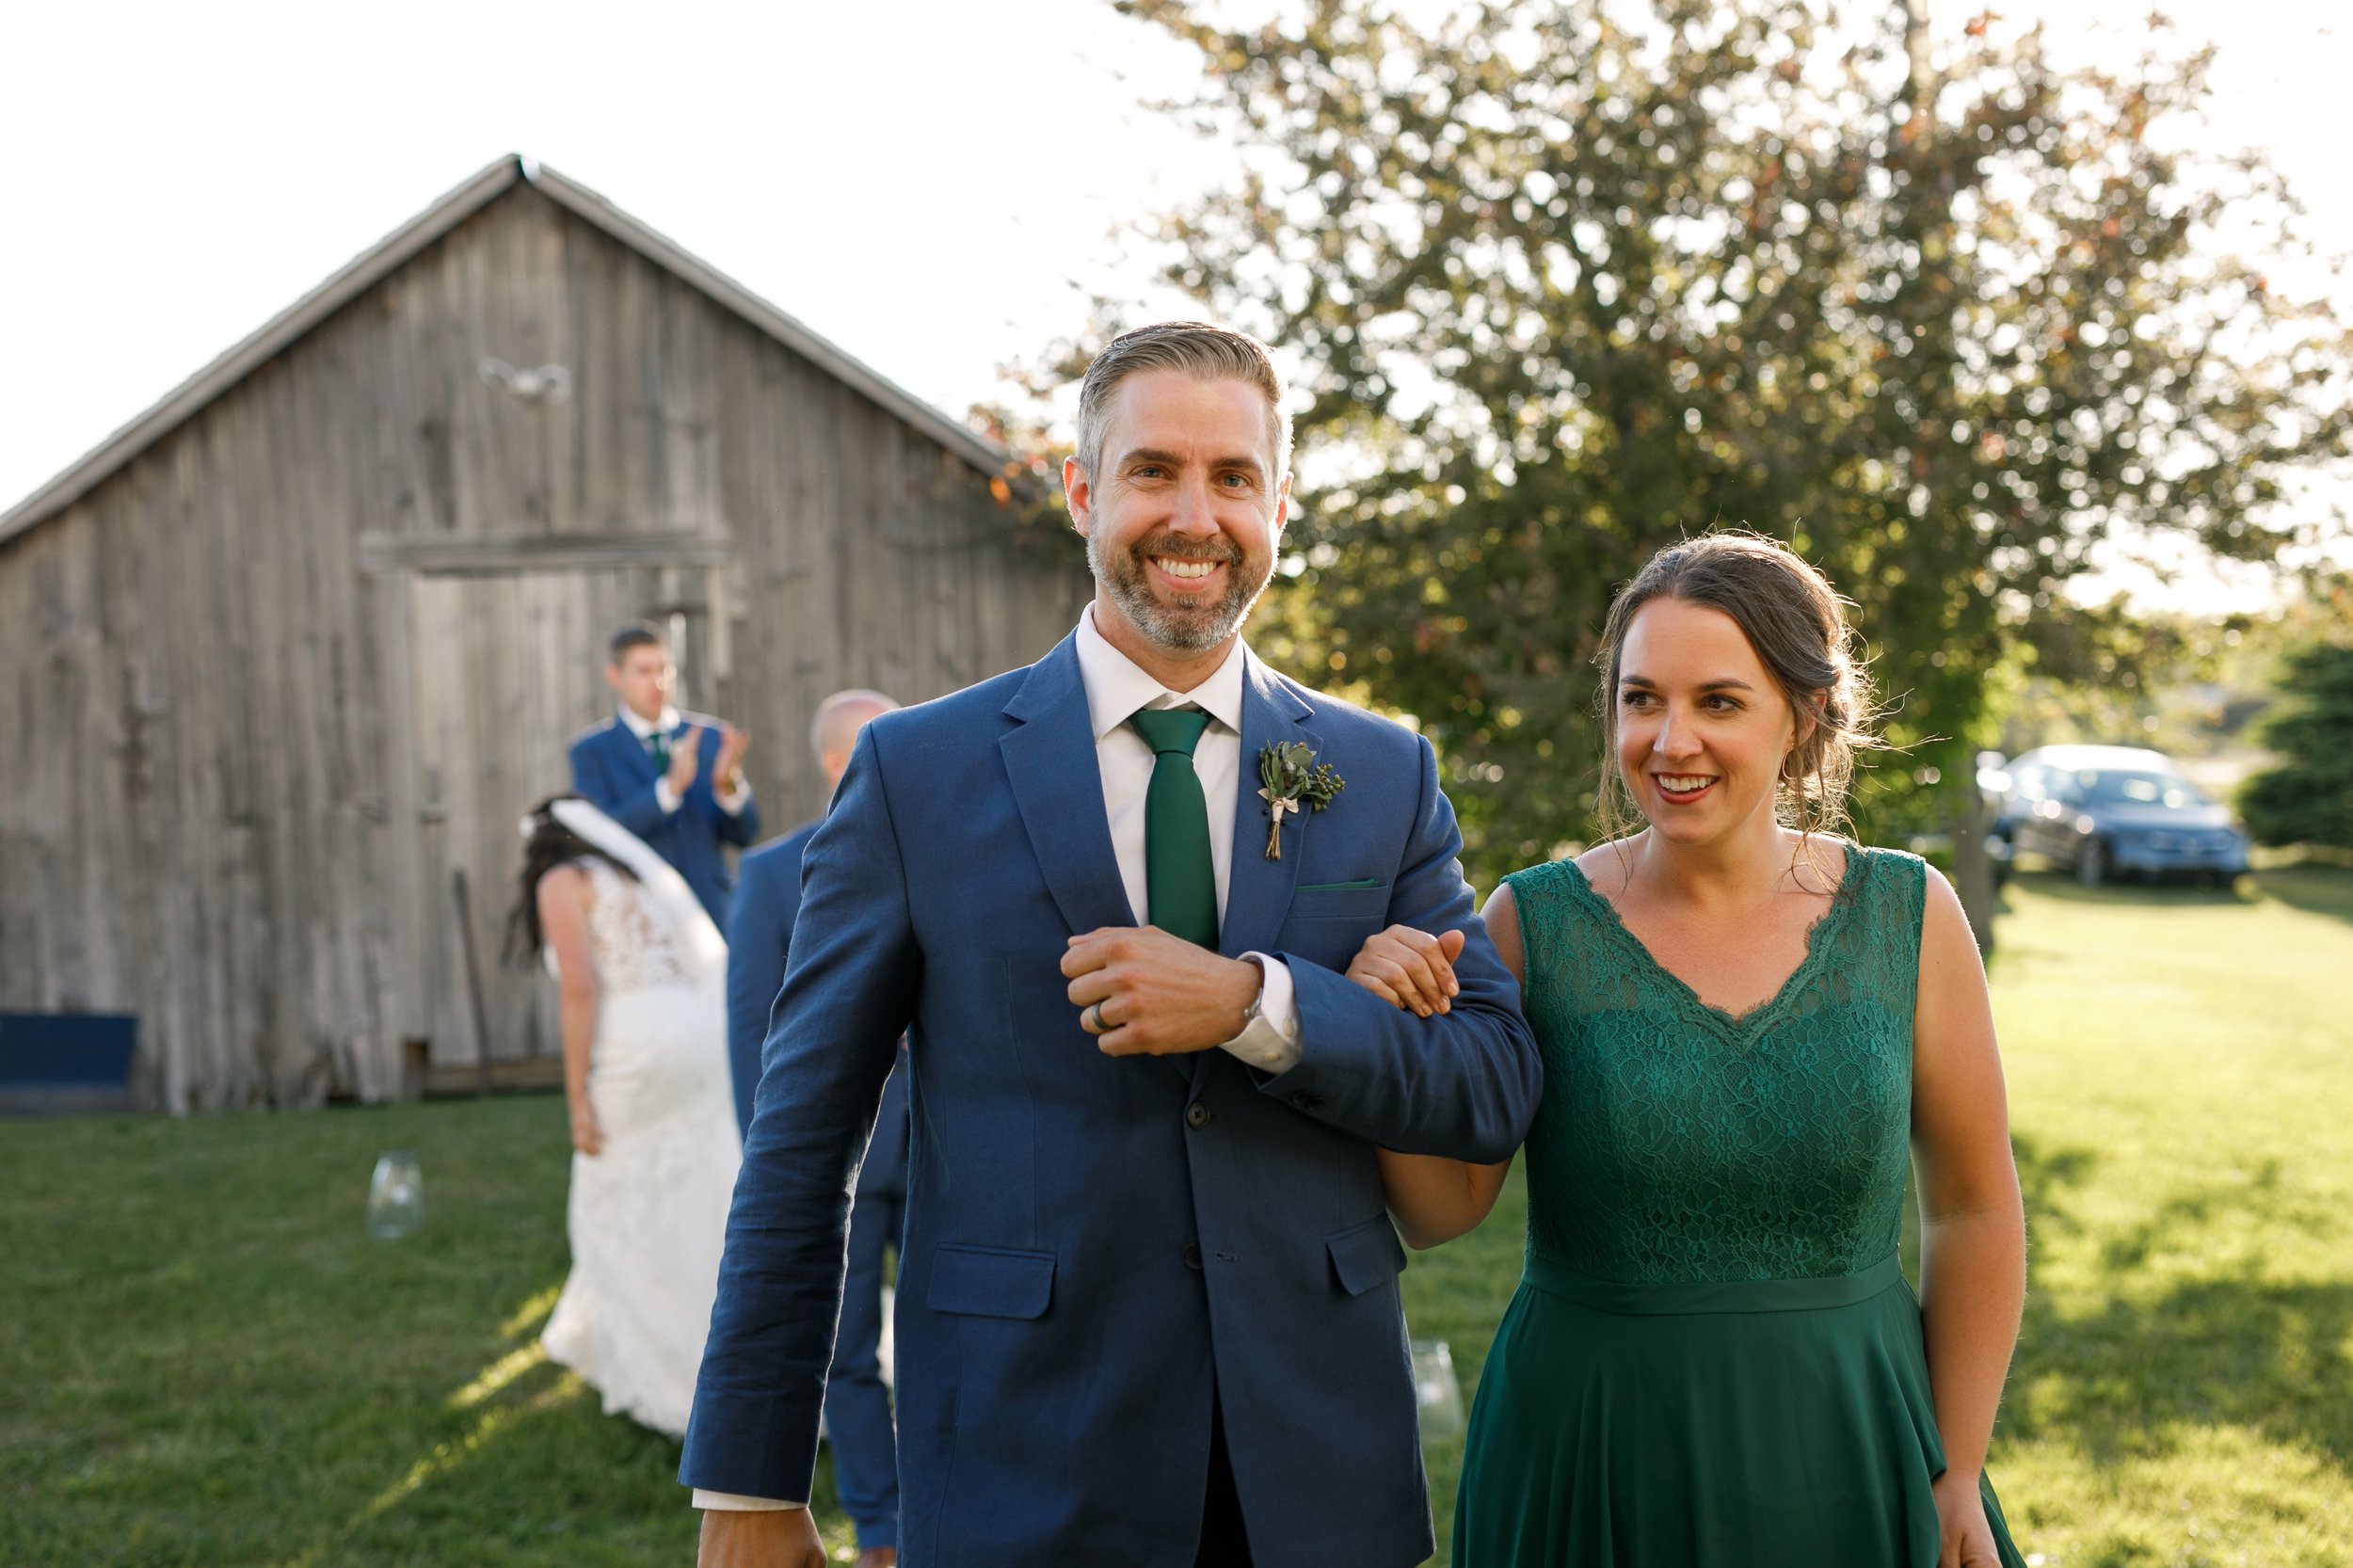 Sparta Wedding Photographer - Grand Rapids Wedding Photographer - Backyard Wedding - Jessica Darling - Ang and Kyle Wedding - J Darling Photo153.jpg